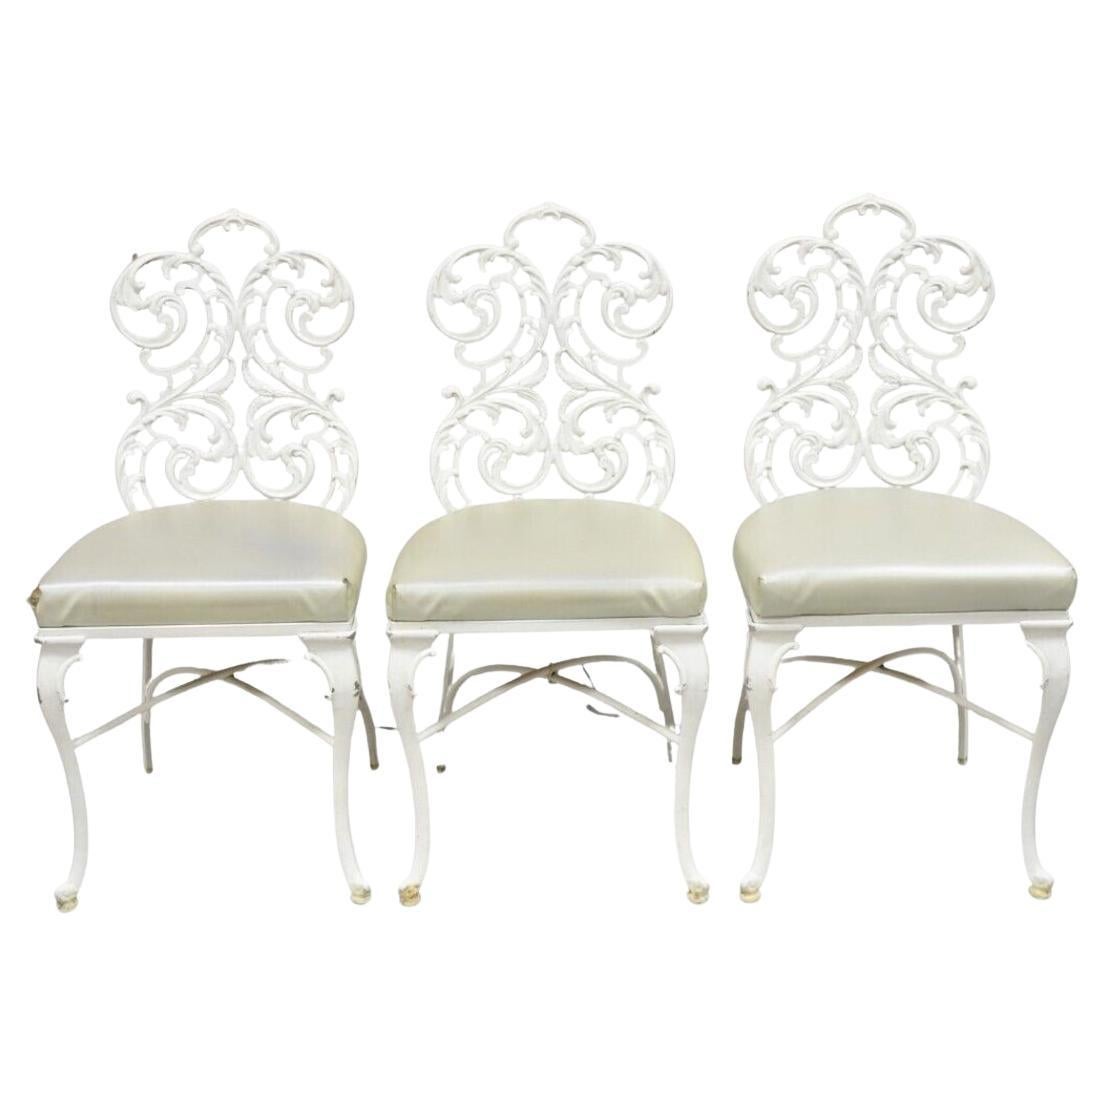 Vintage Art Nouveau Style Cast Aluminum Sunroom Patio Dining Chairs - Set of 3.  For Sale